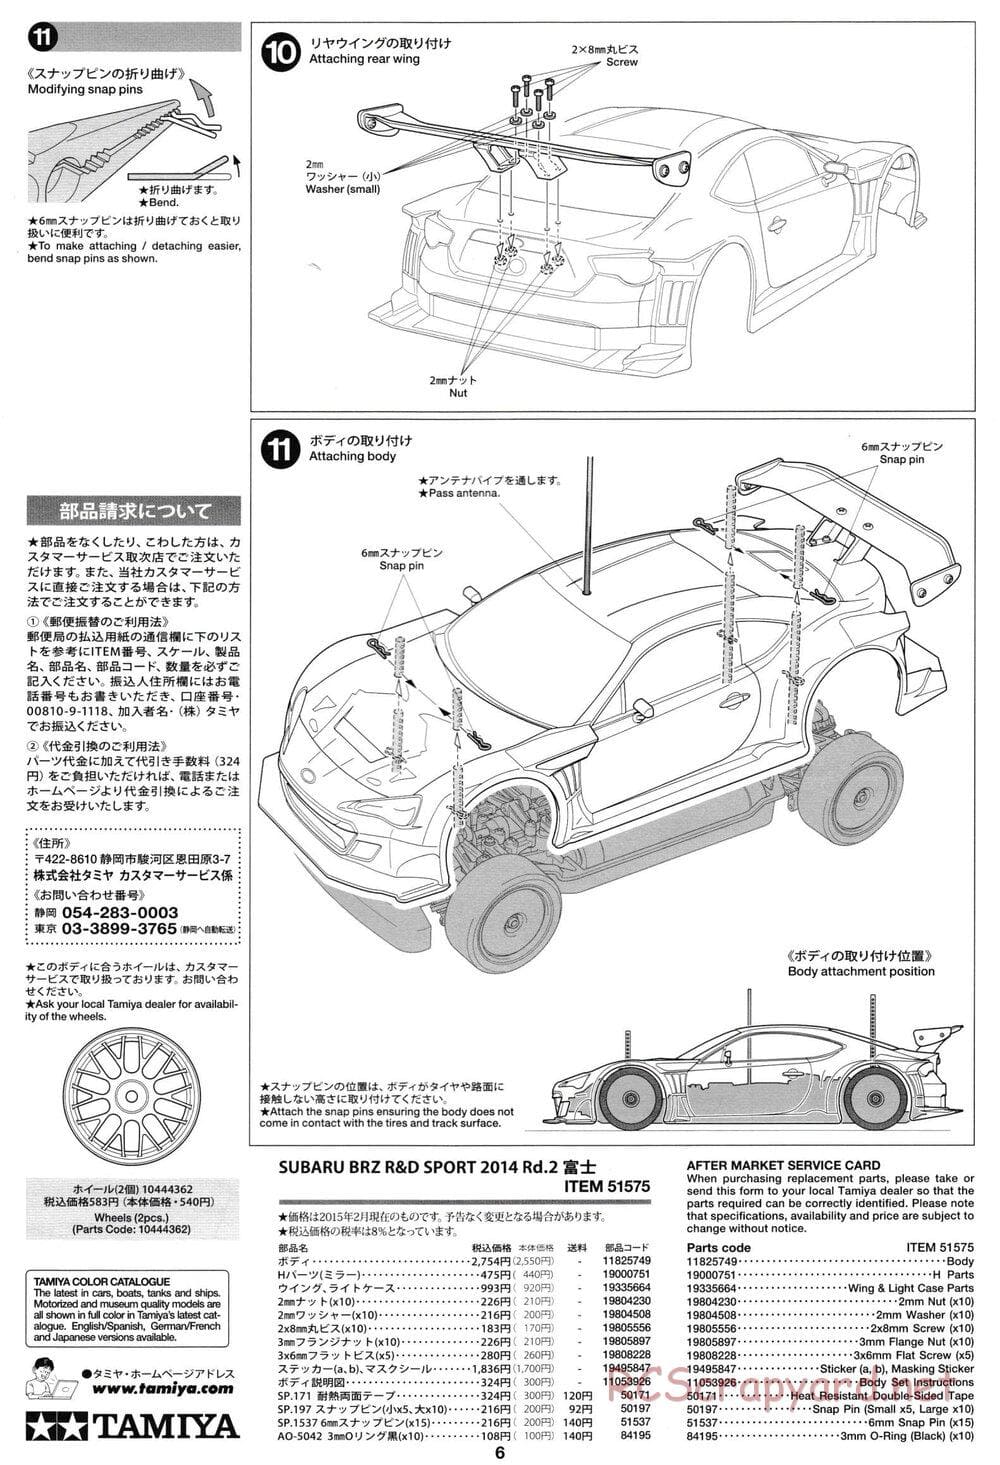 Tamiya - Subaru BRZ R&D Sport 2014 Rd.2 Fuji - TT-02 Chassis - Body Manual - Page 6